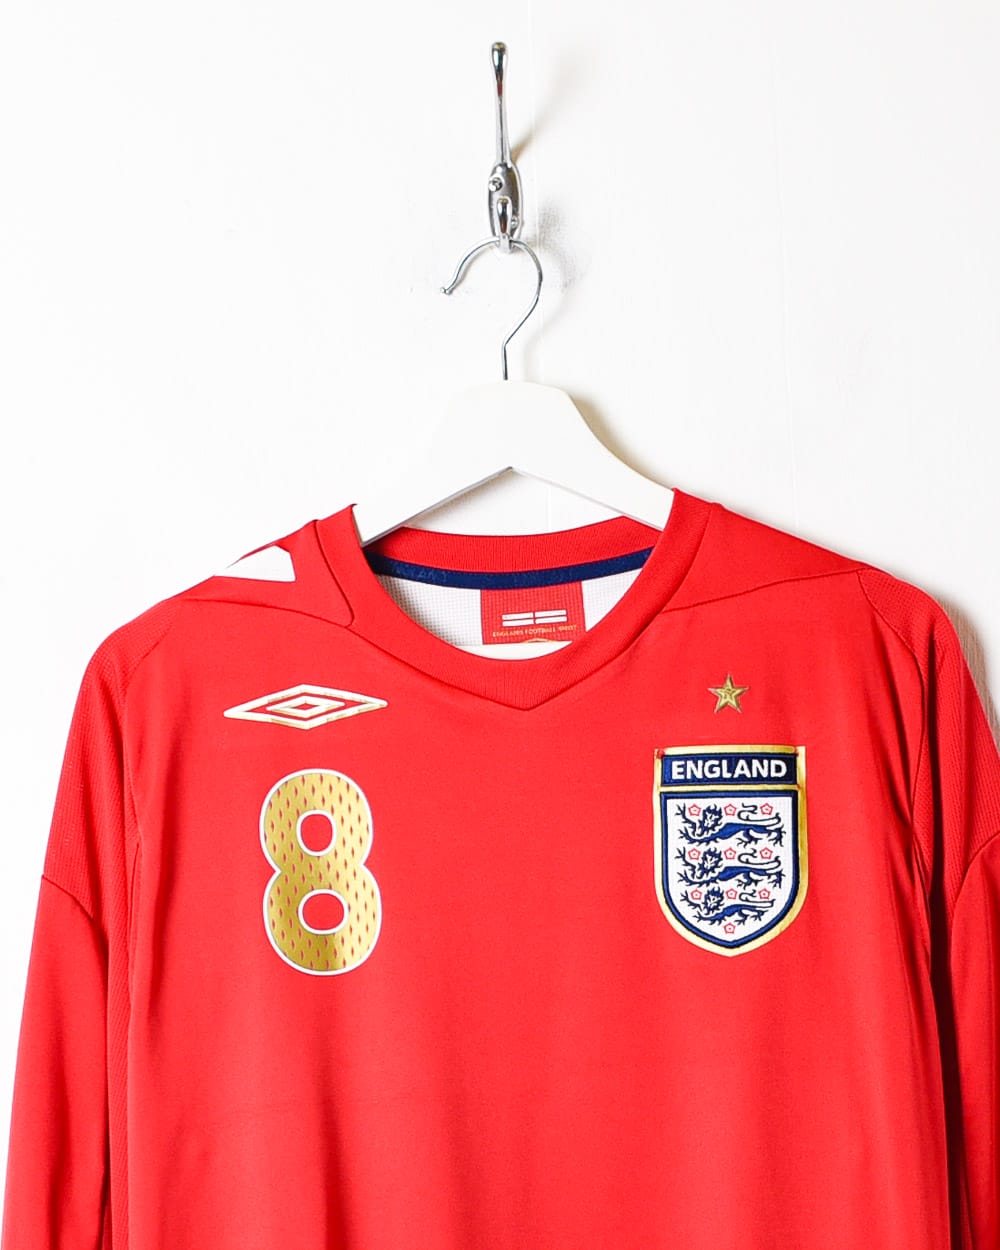 Red Umbro England 2006/08 Lampard Long Sleeved Away Football Shirt - Medium